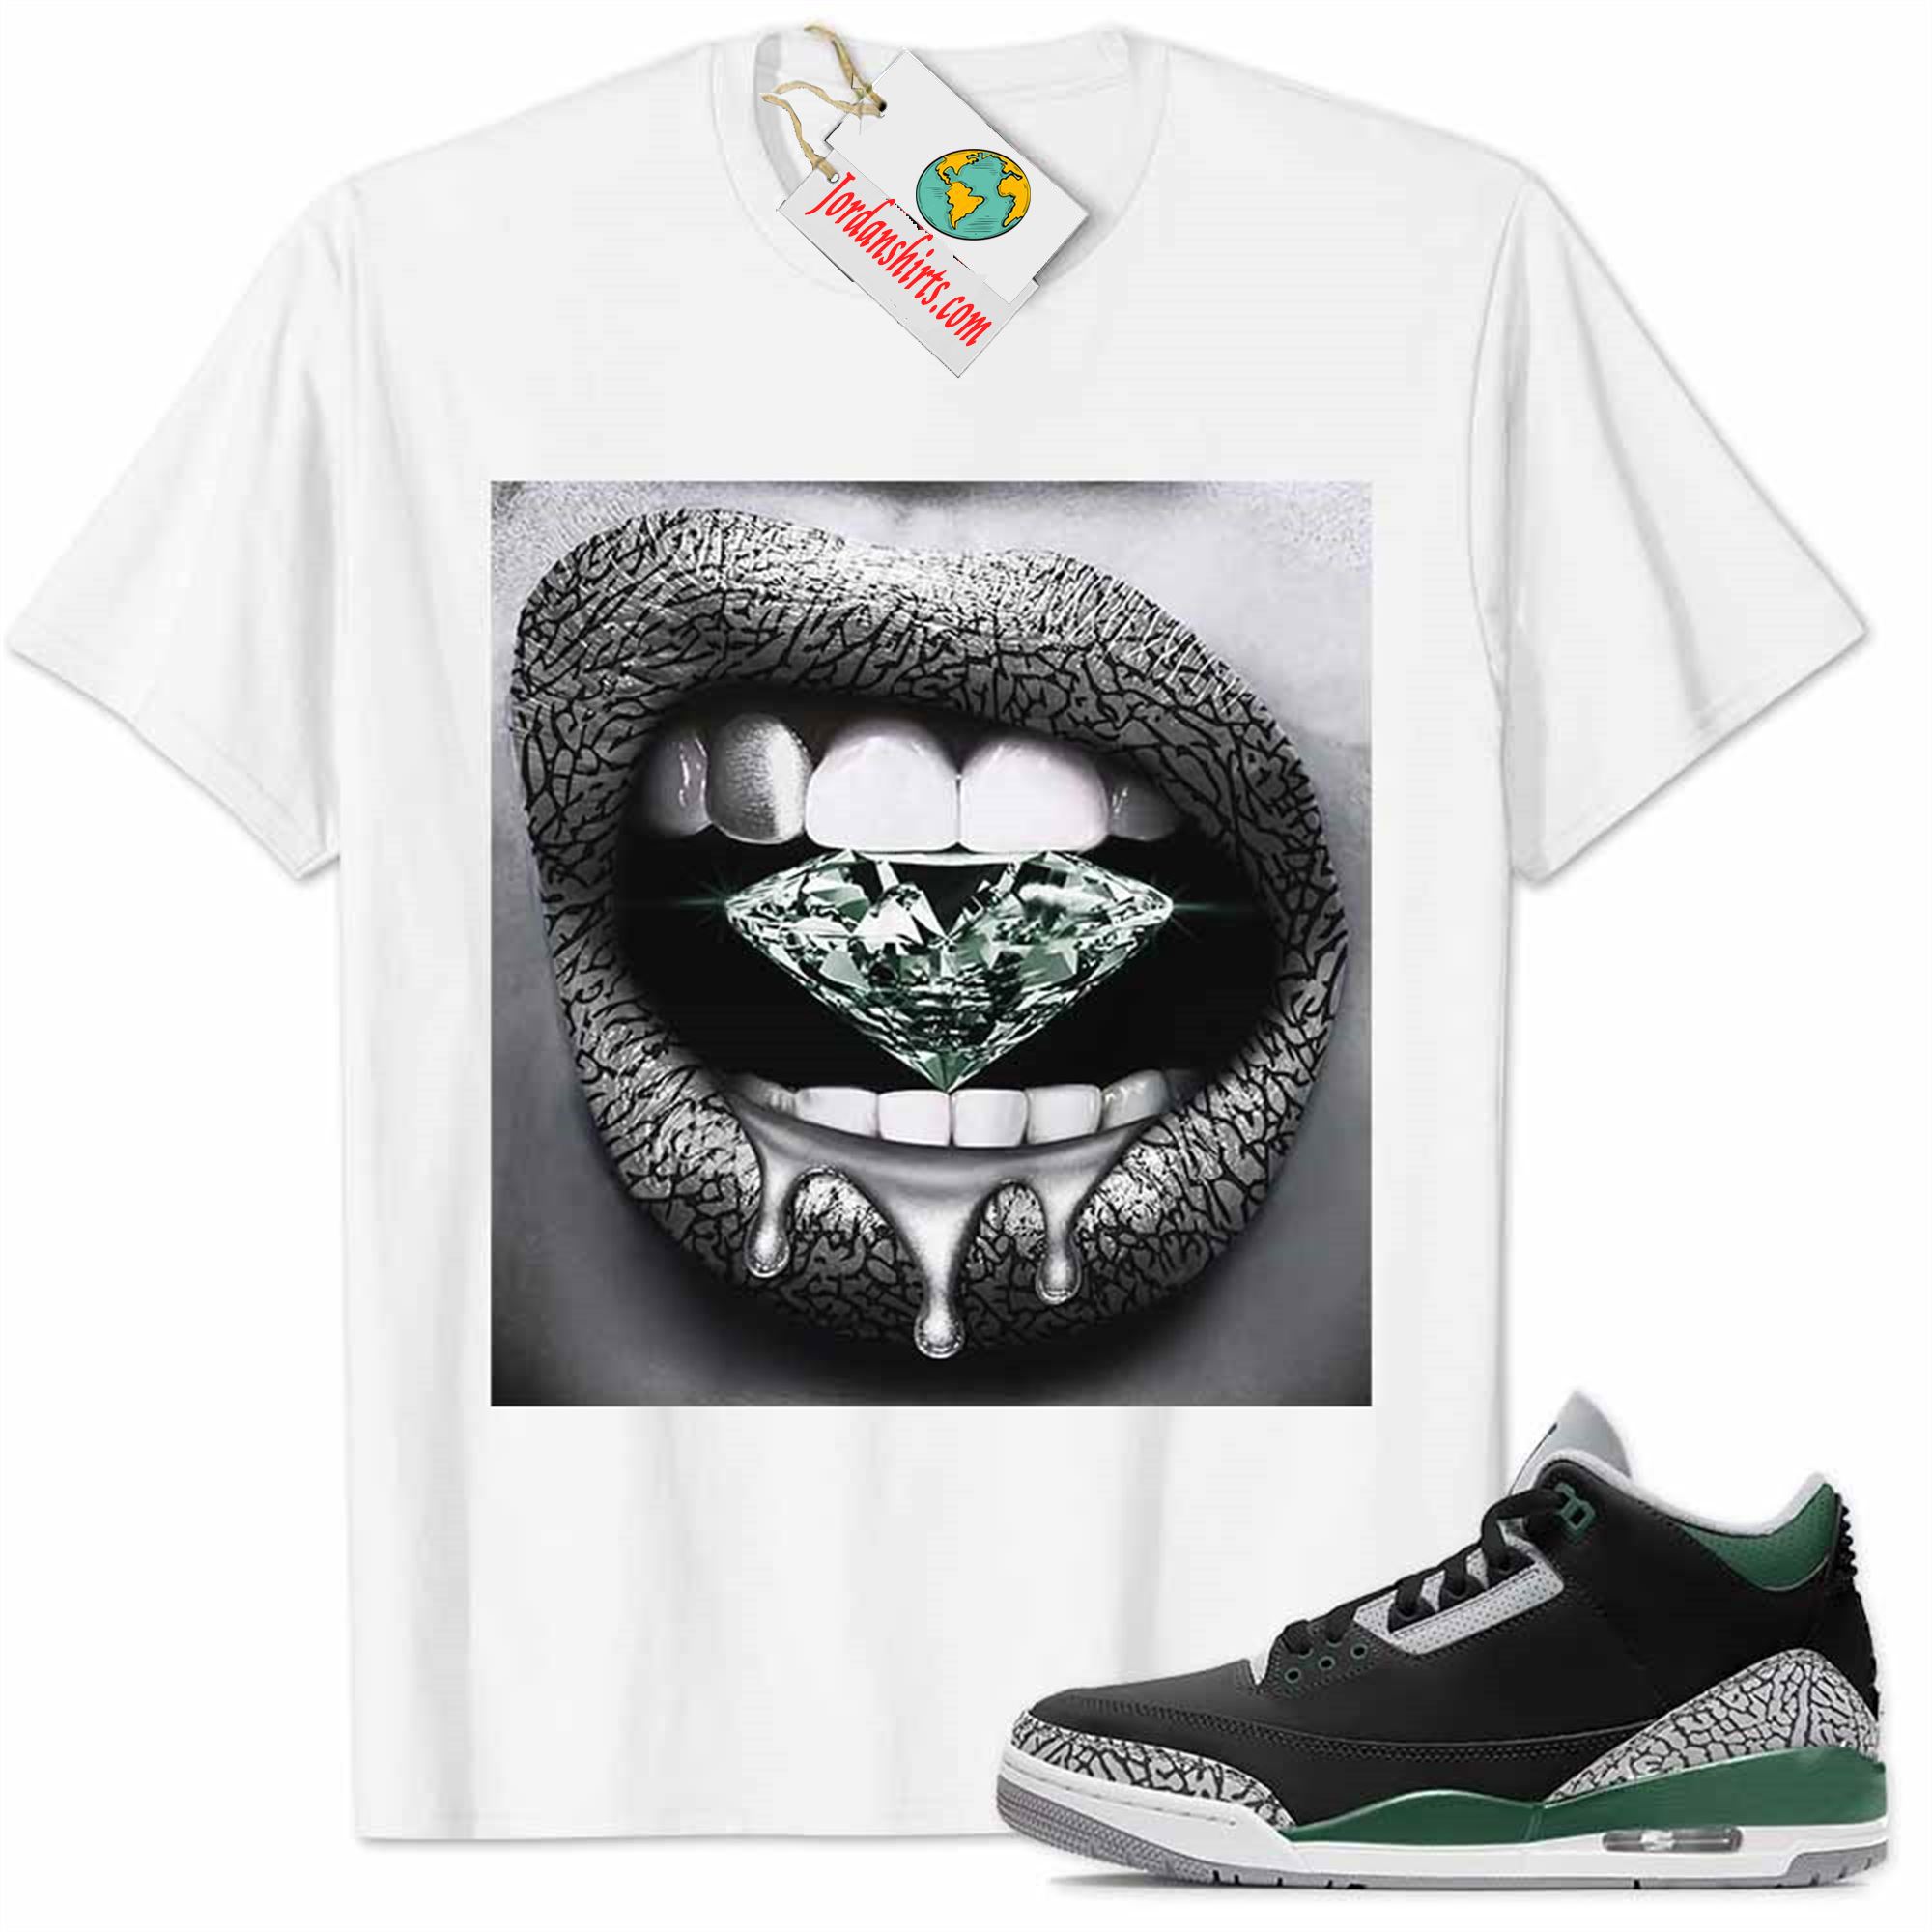 Jordan 3 Shirt, Jordan 3 Pine Green Shirt Sexy Lip Bite Diamond Dripping White Size Up To 5xl